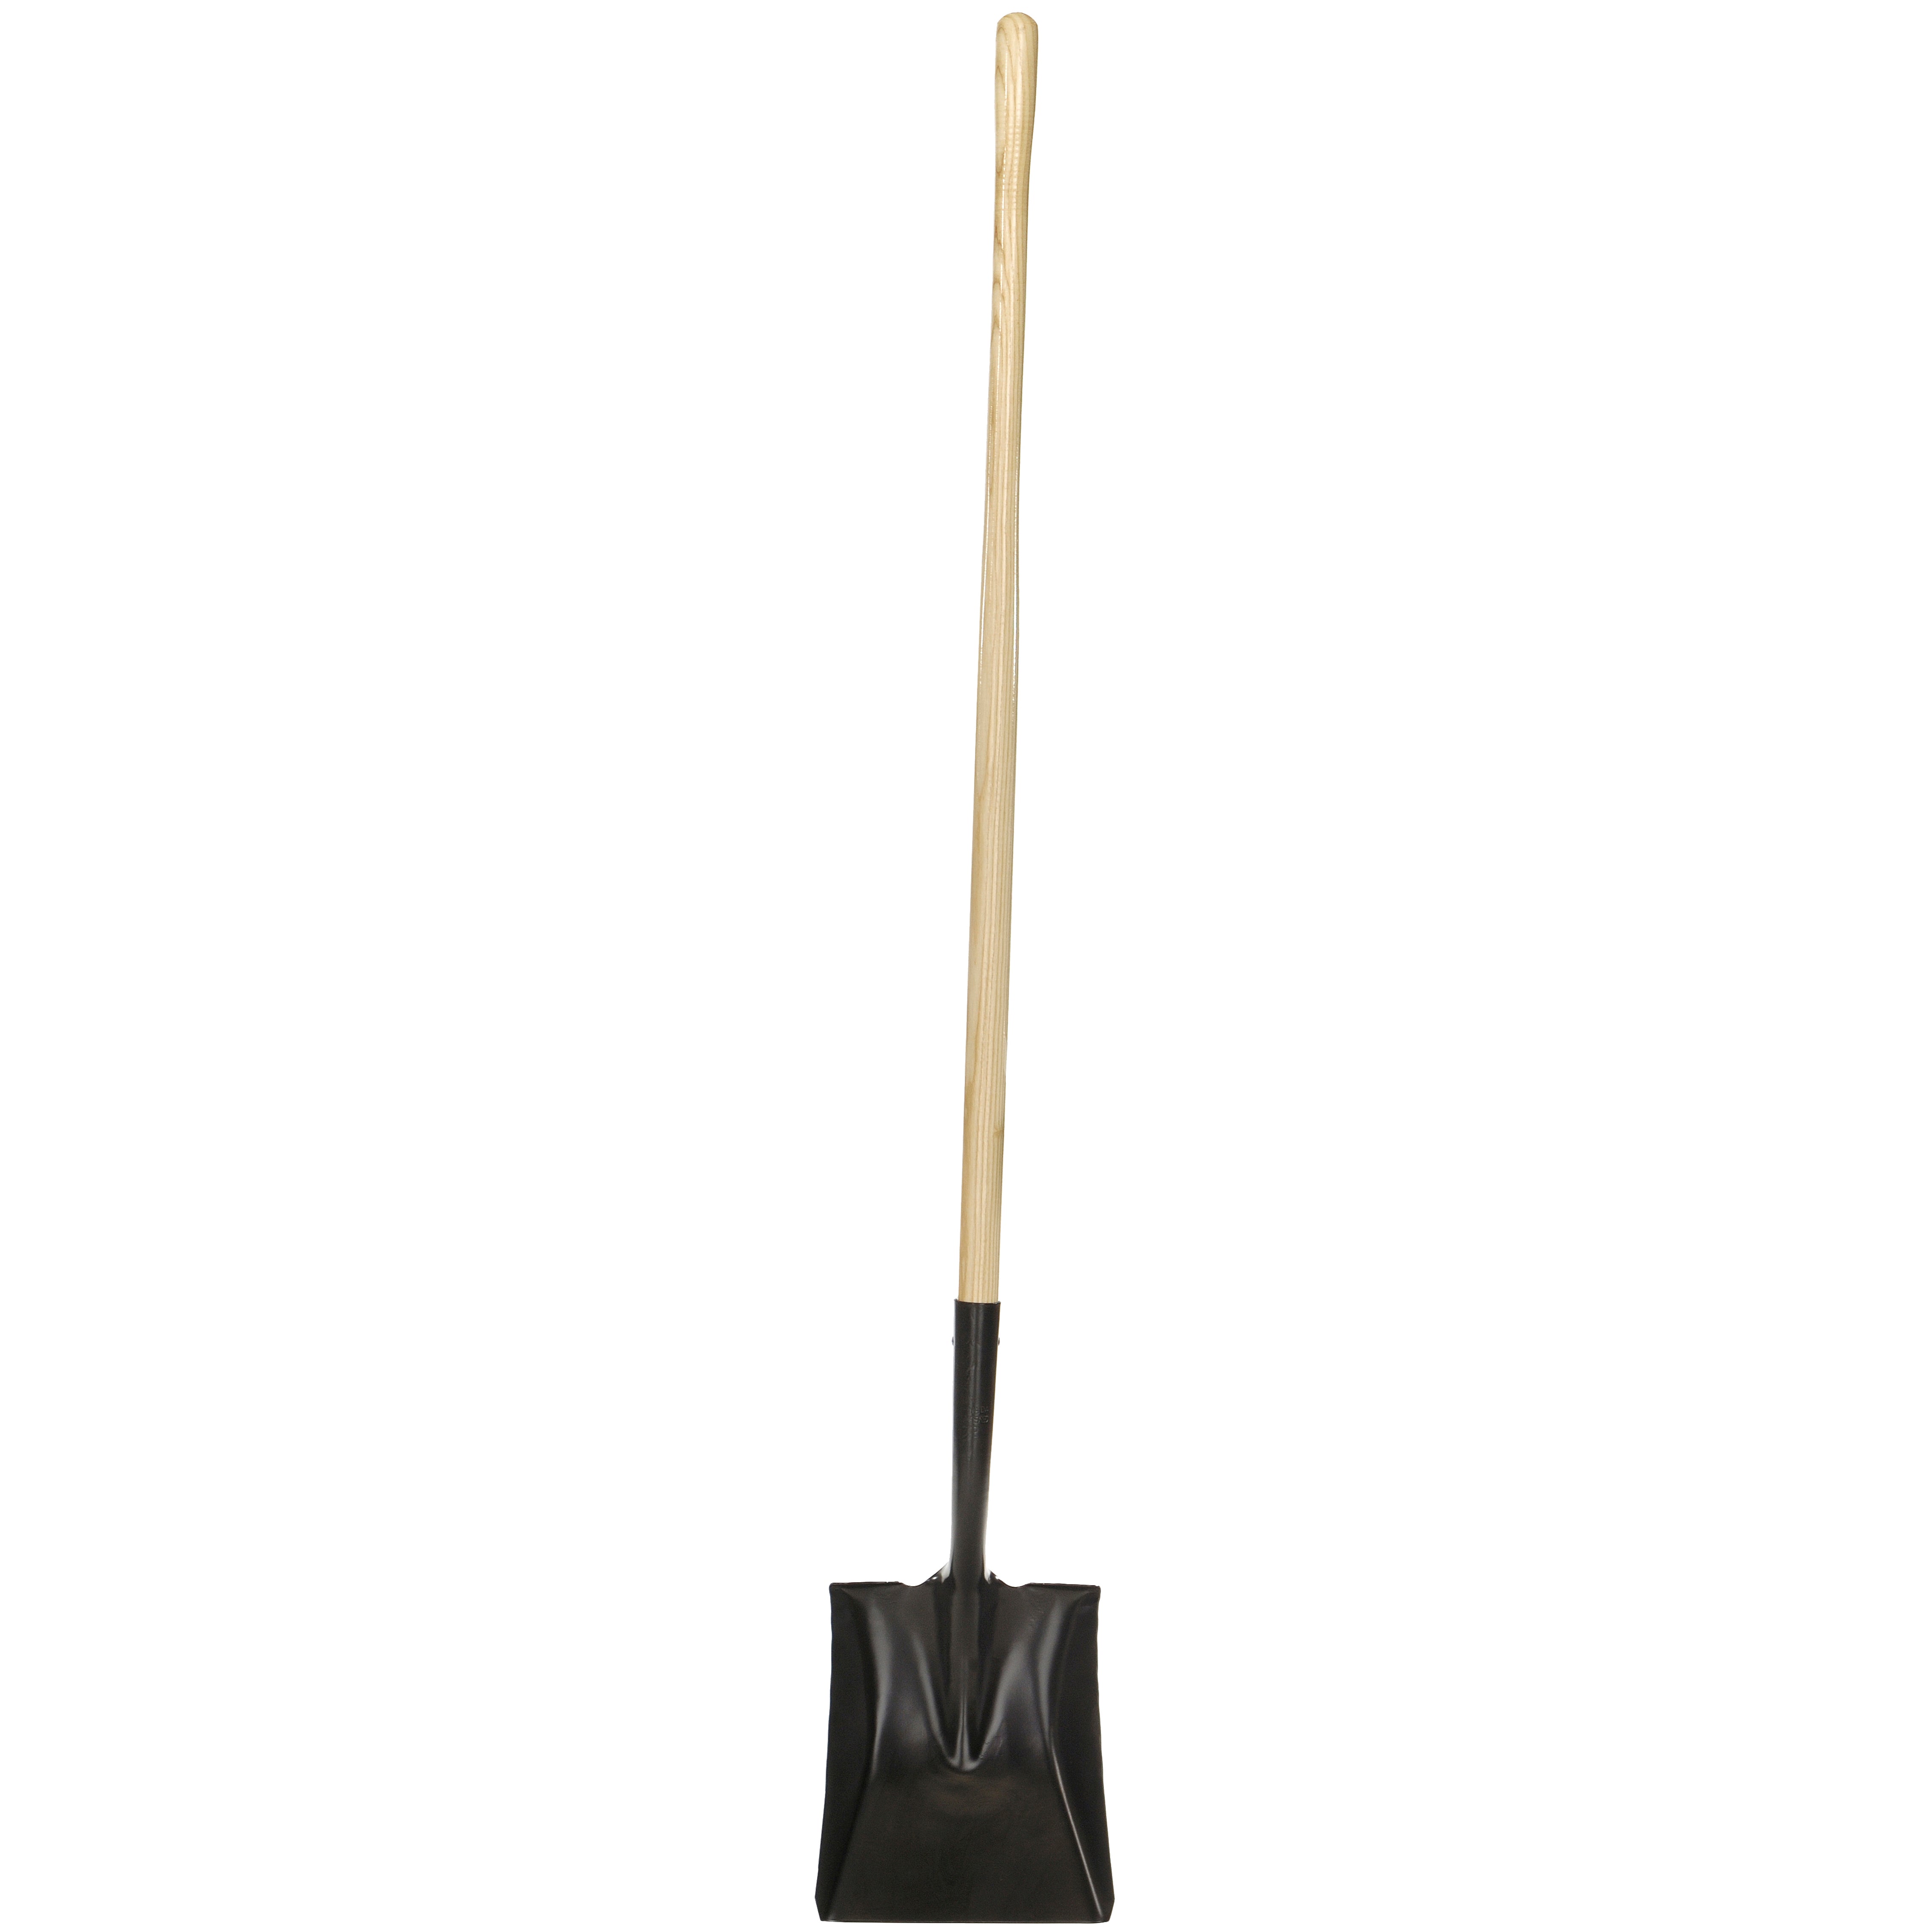 Square point shovel, long wood handle